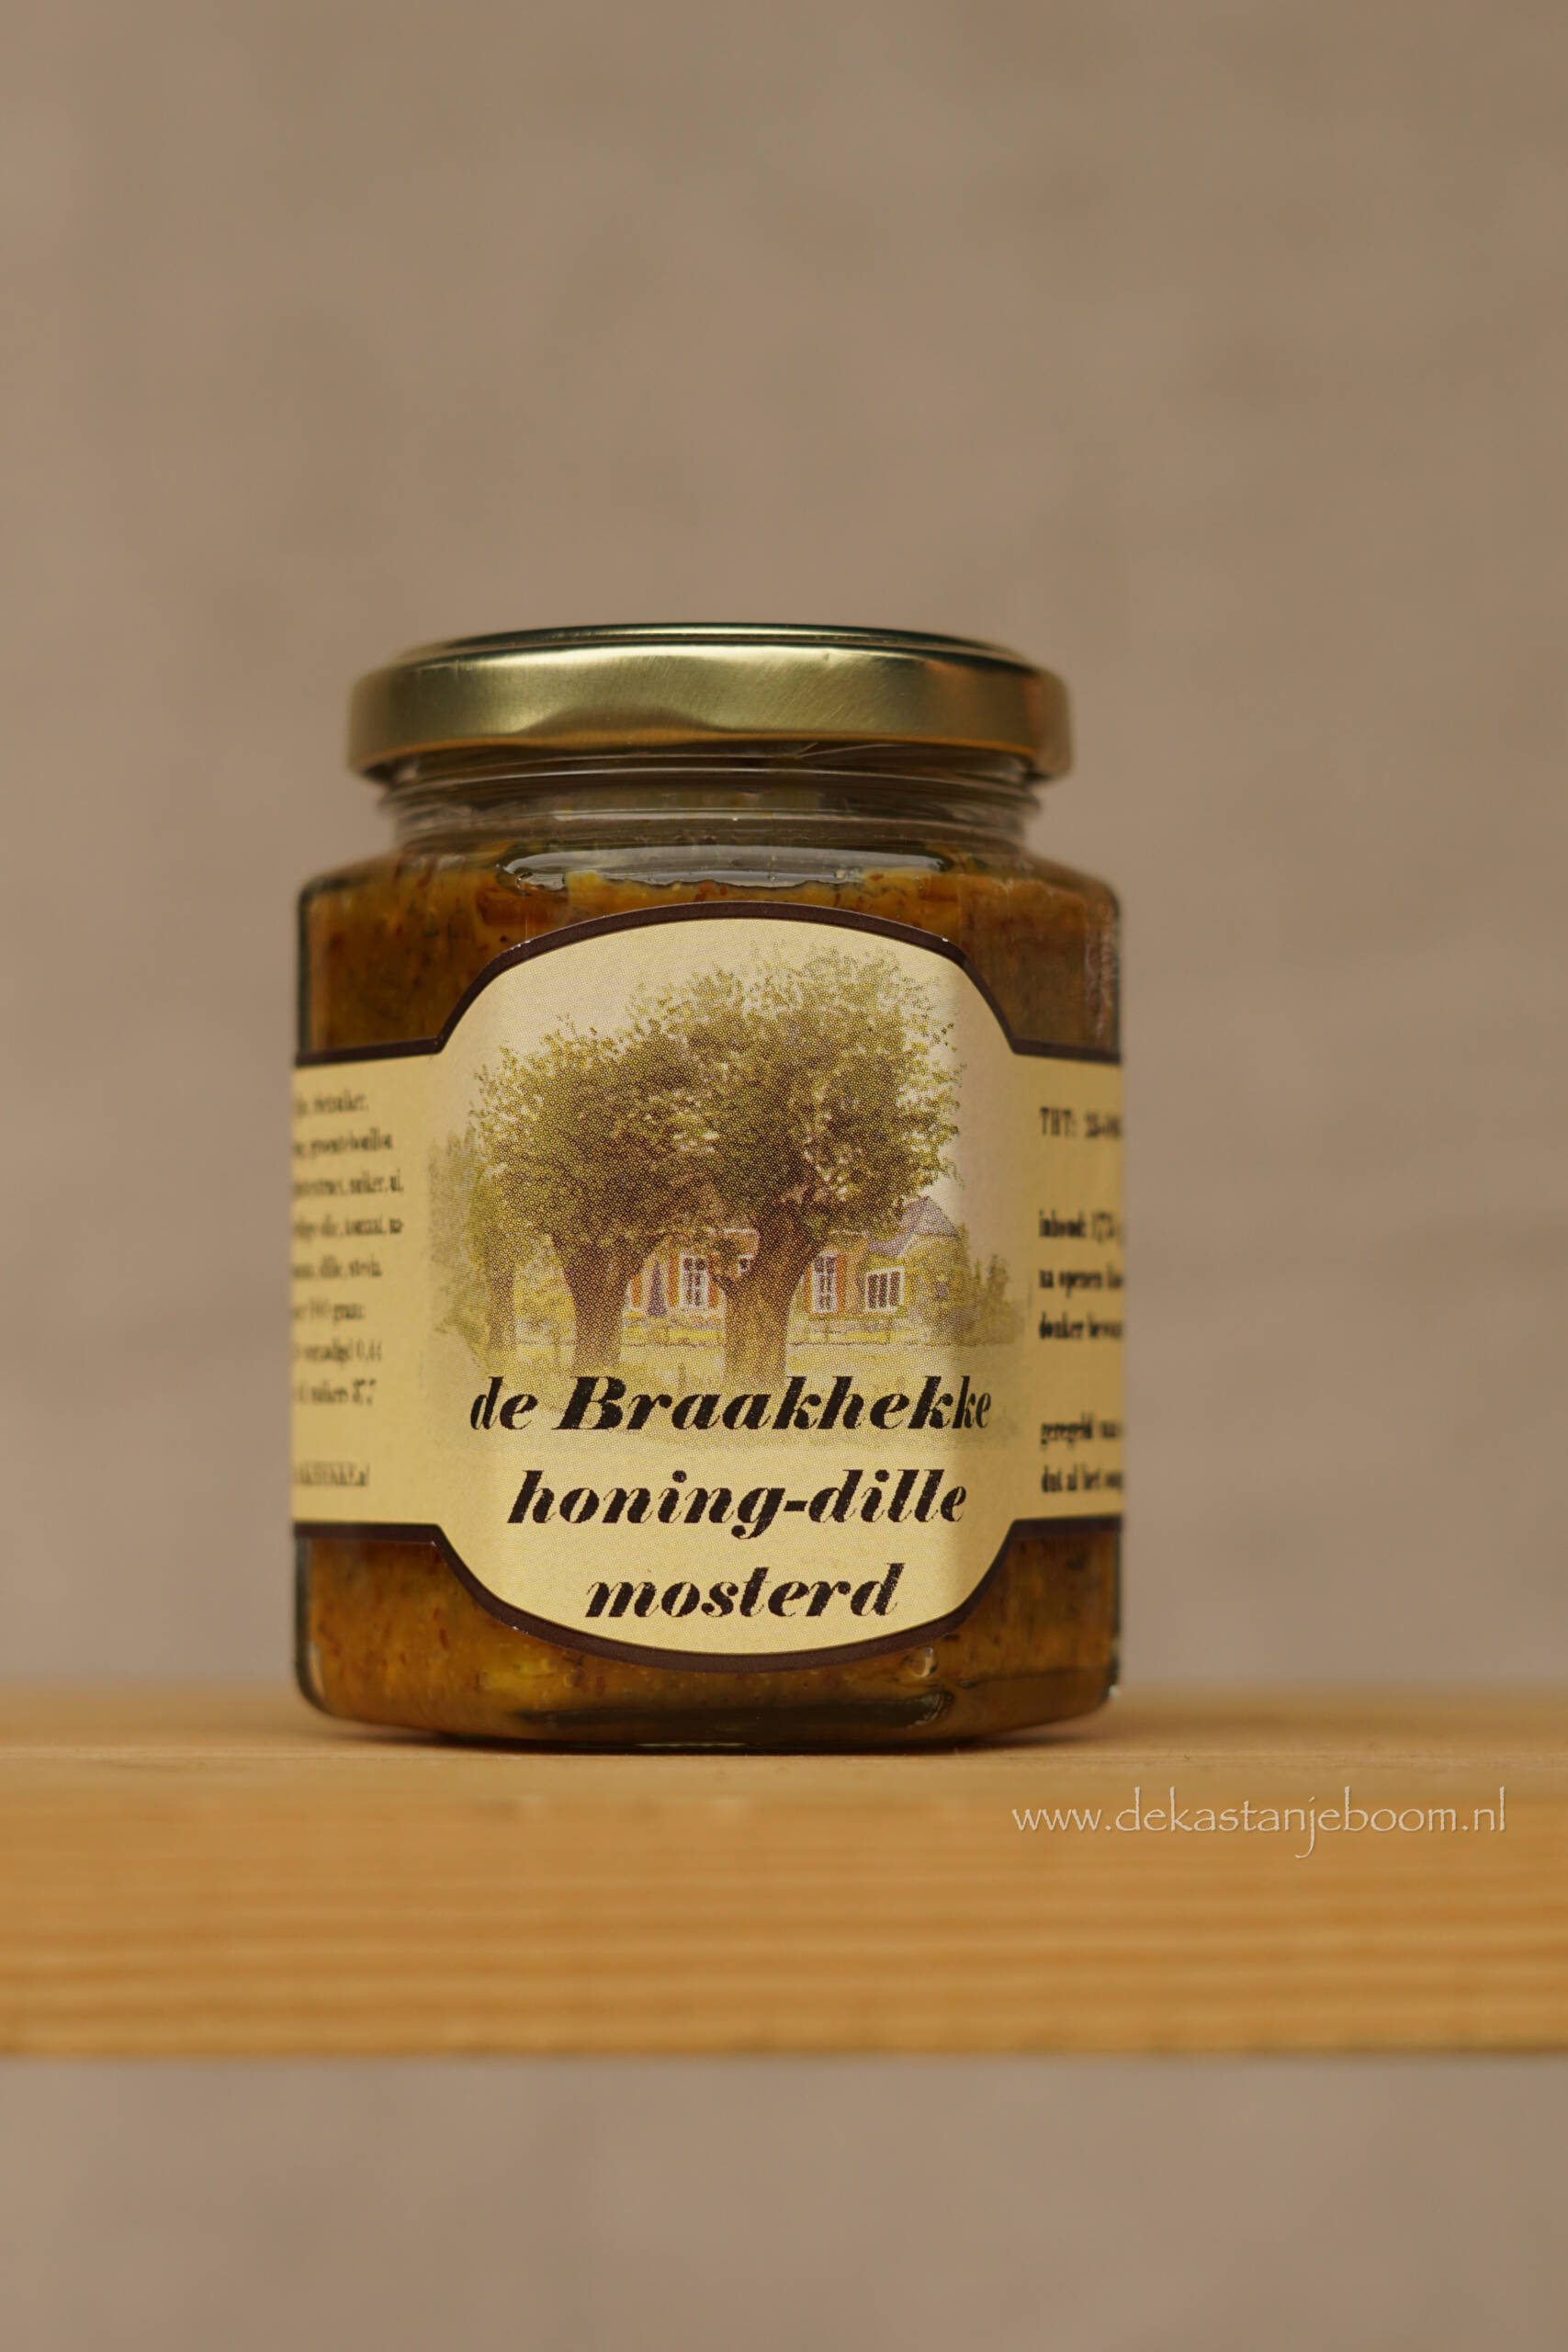 De Braakhekke honing-dille mosterd